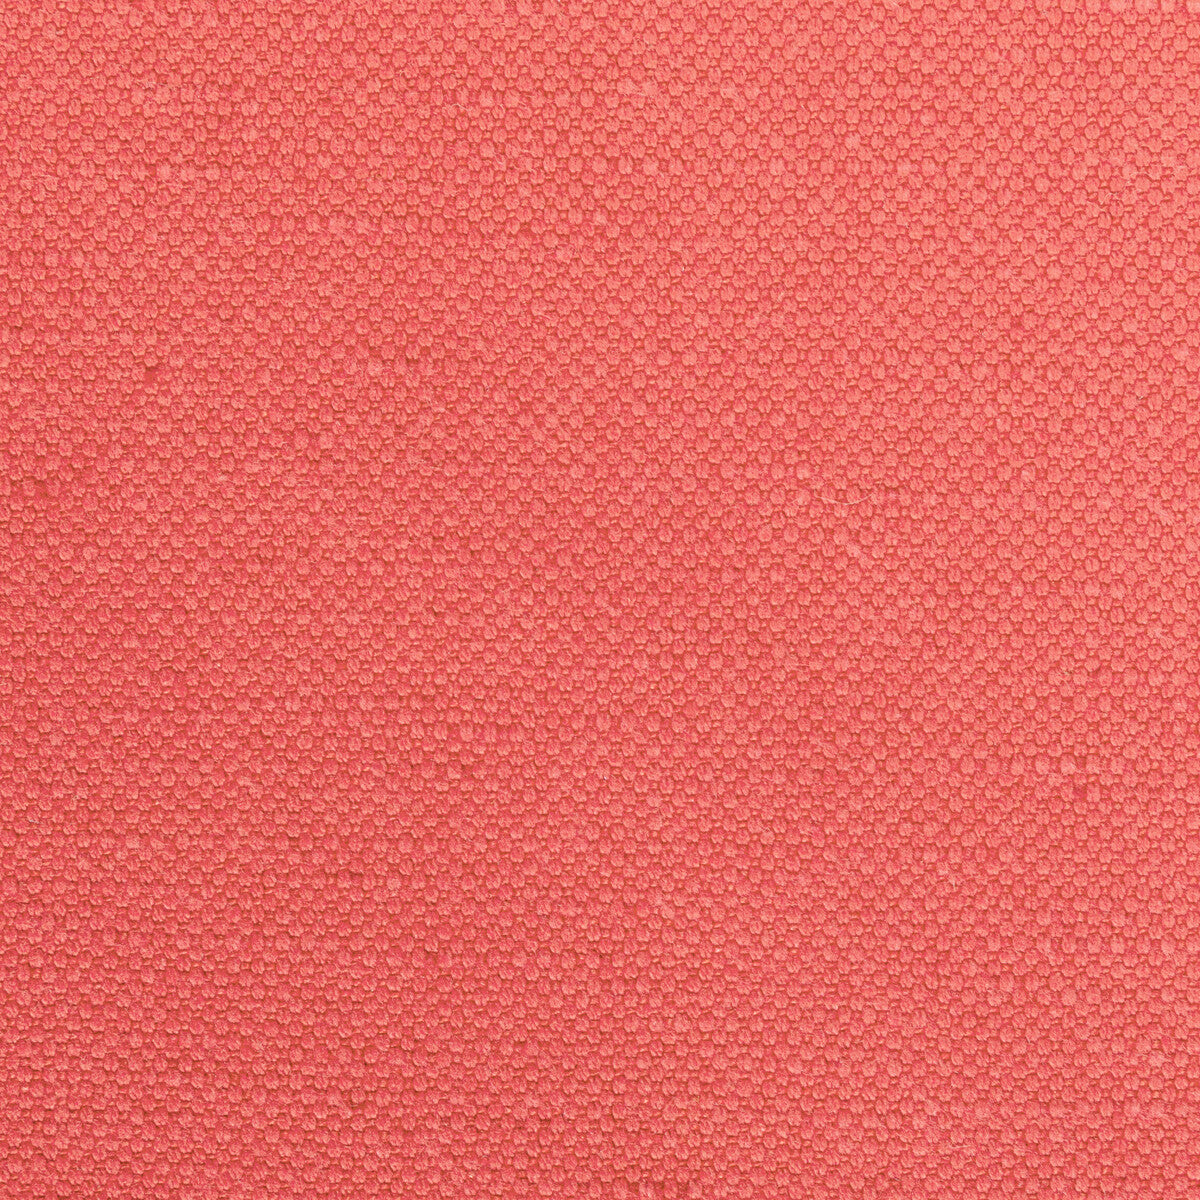 Carson fabric in azalea color - pattern 36282.717.0 - by Kravet Basics